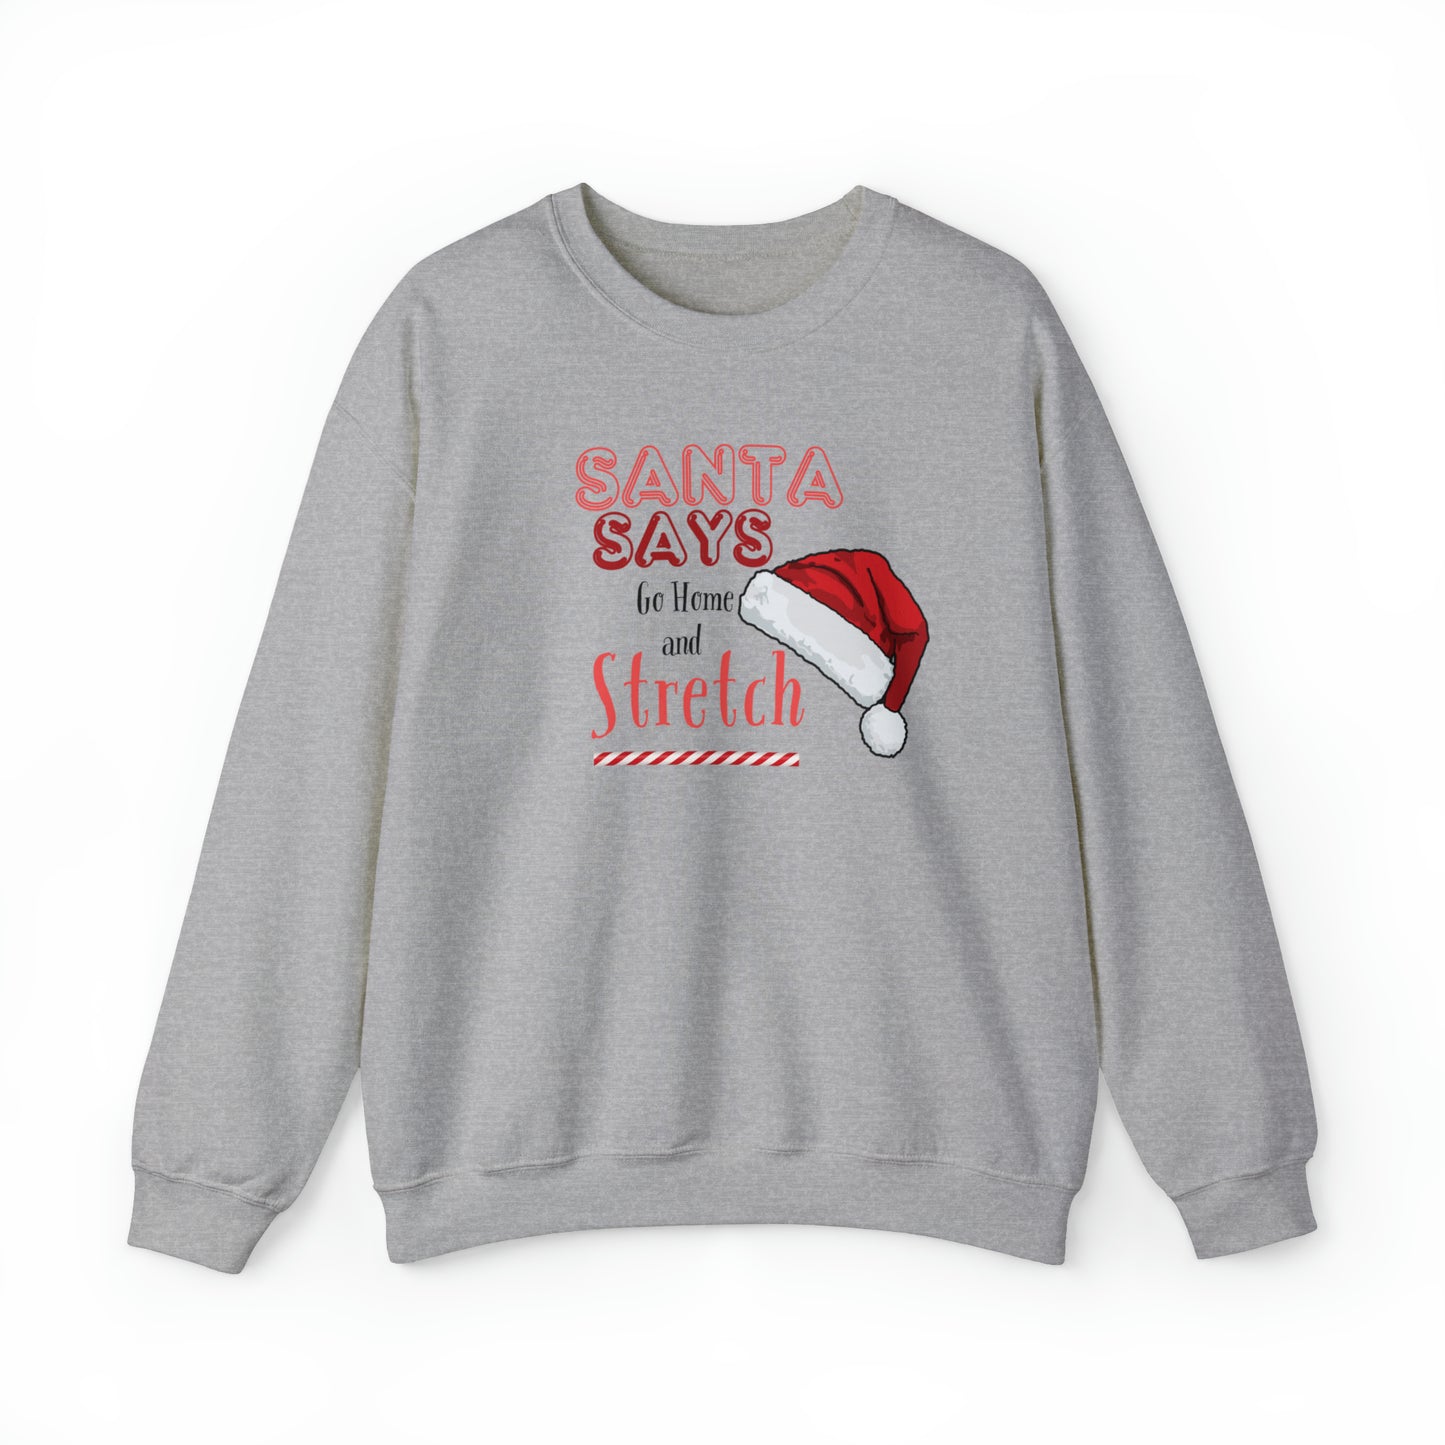 Holidays:: Christmas sweatshirt - Santa says stretch